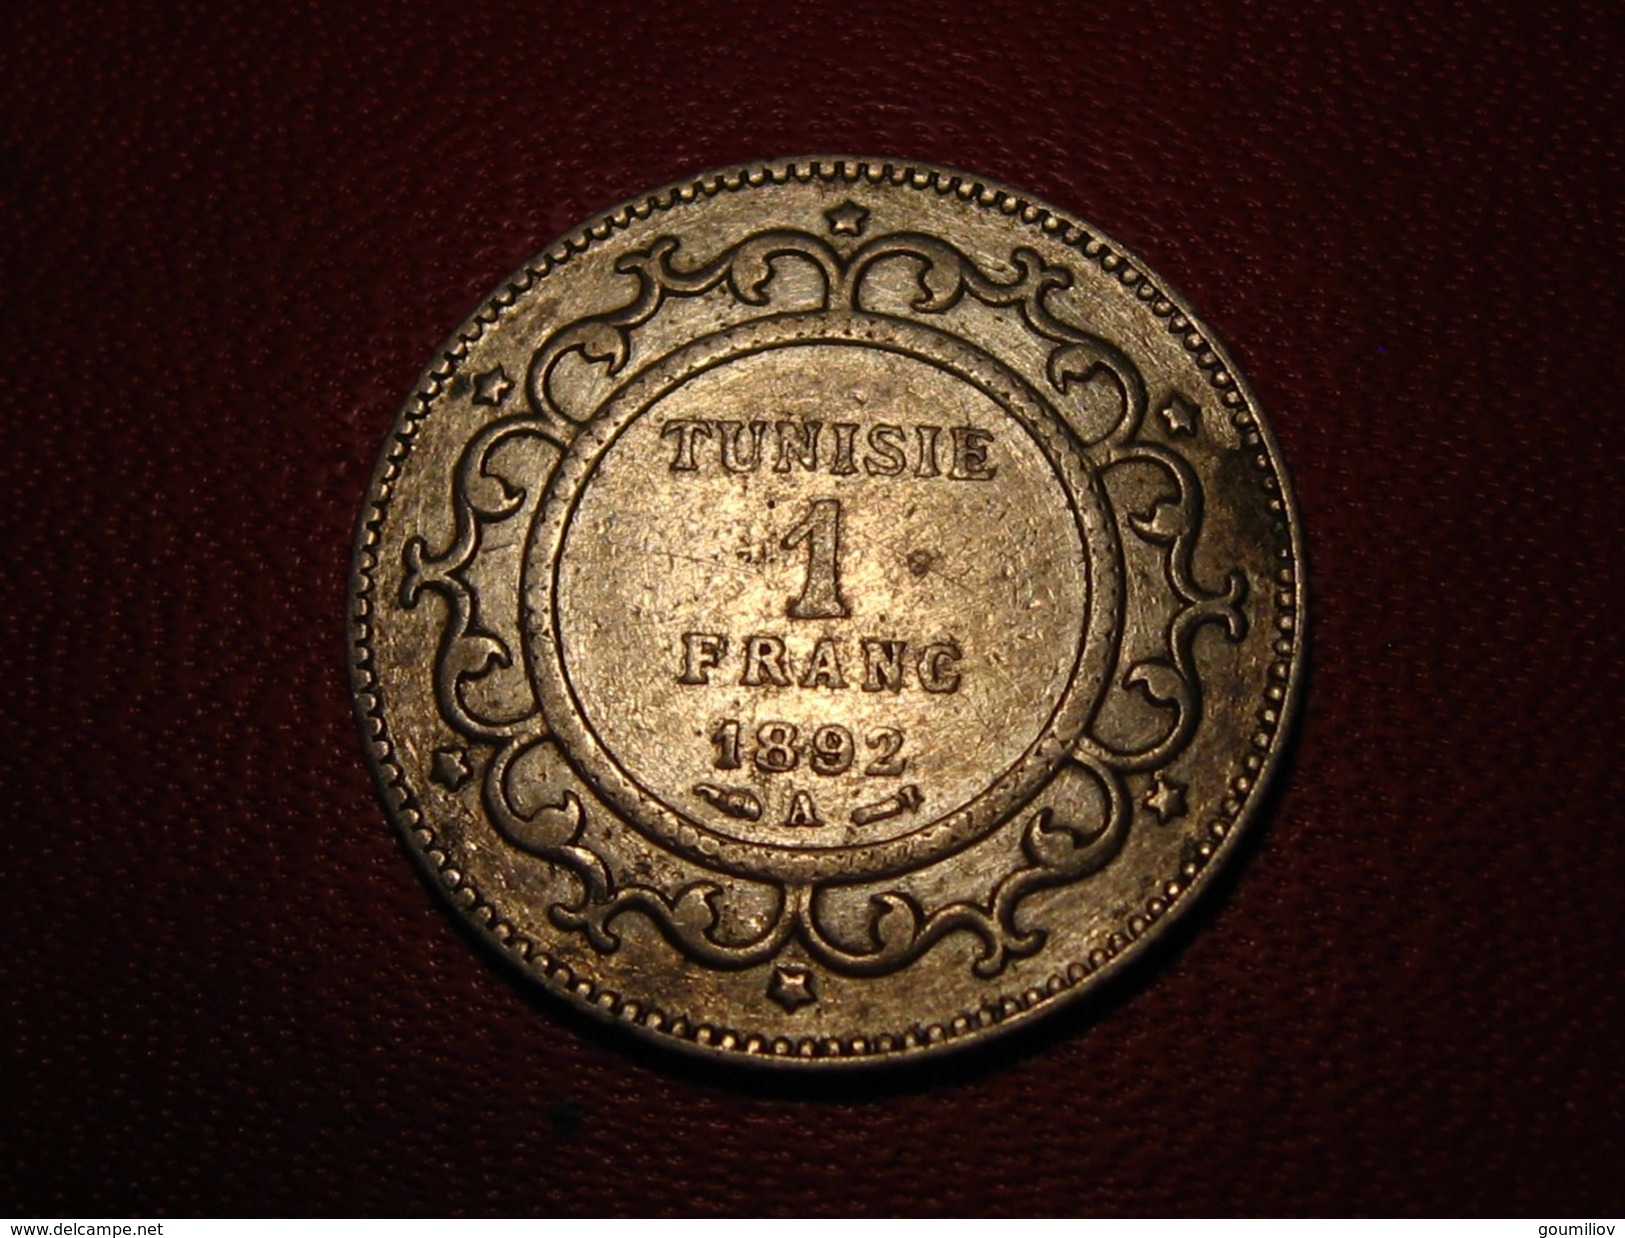 Tunisie - Franc 1892 A 3108 - Túnez